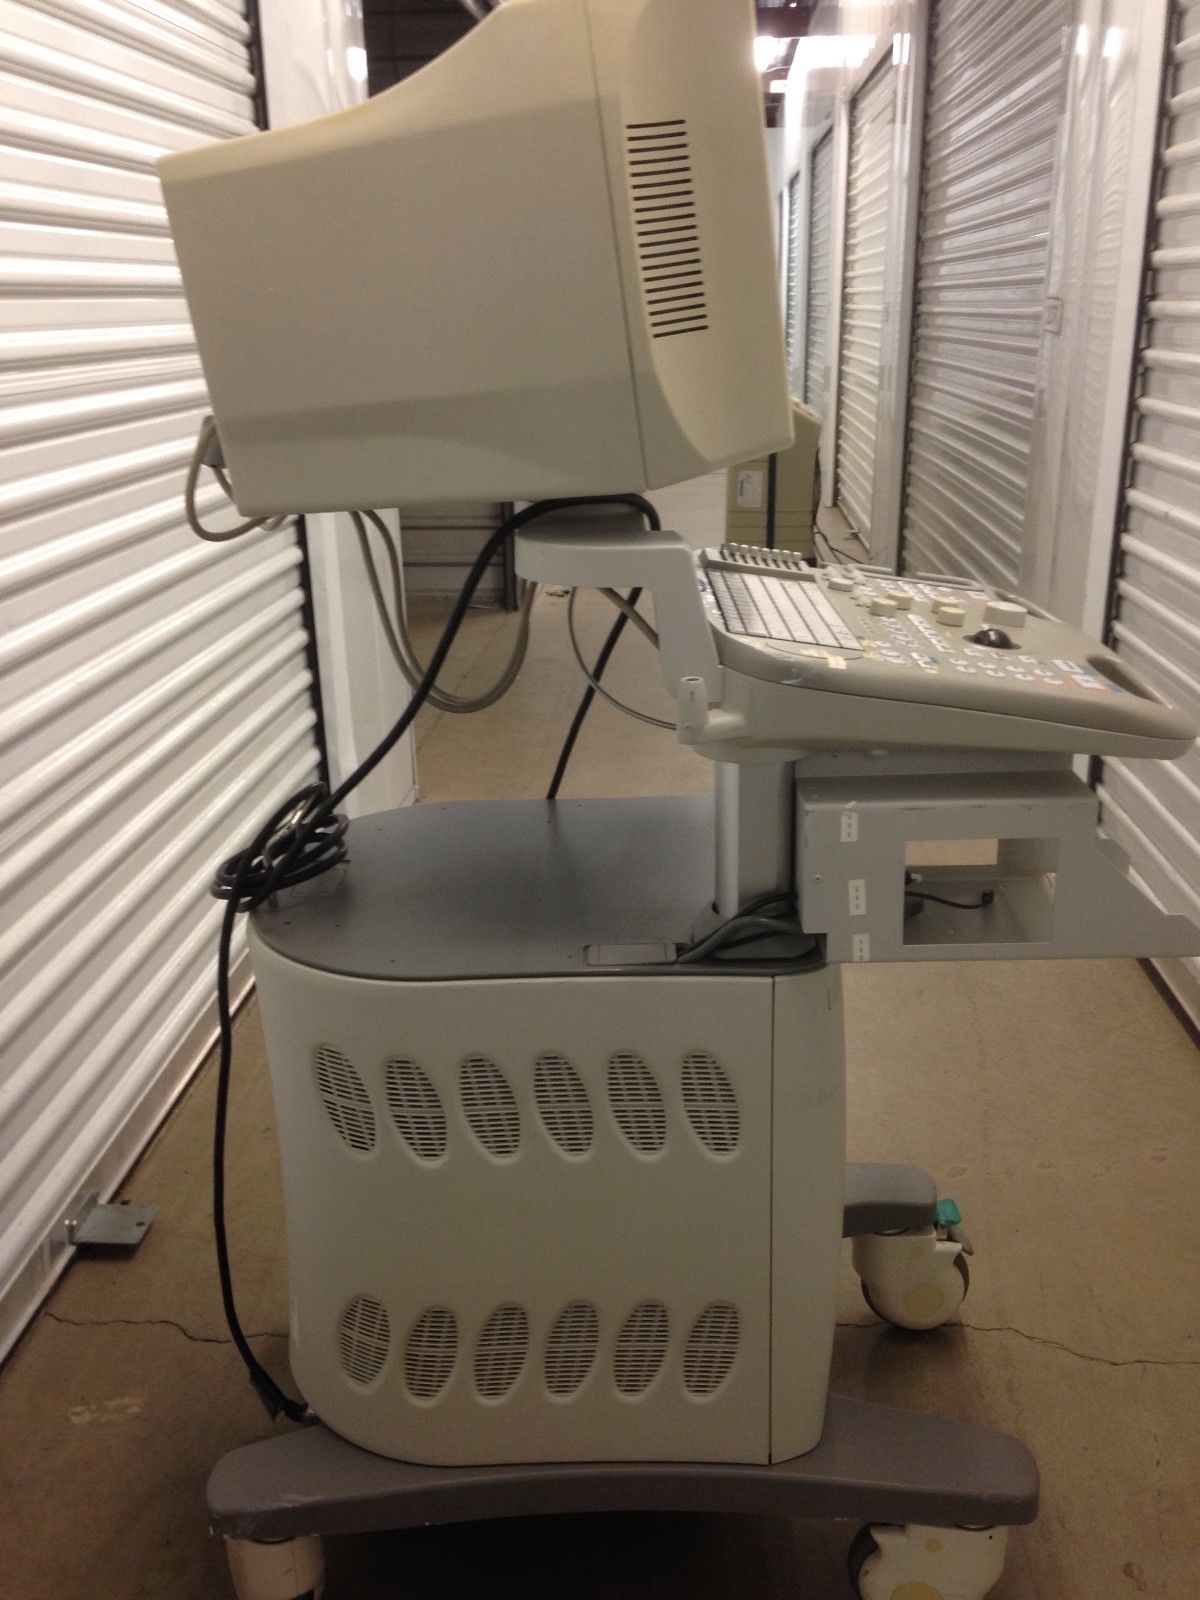 Aloka Model SSD-3500 Pediatric Ultrasound DIAGNOSTIC ULTRASOUND MACHINES FOR SALE